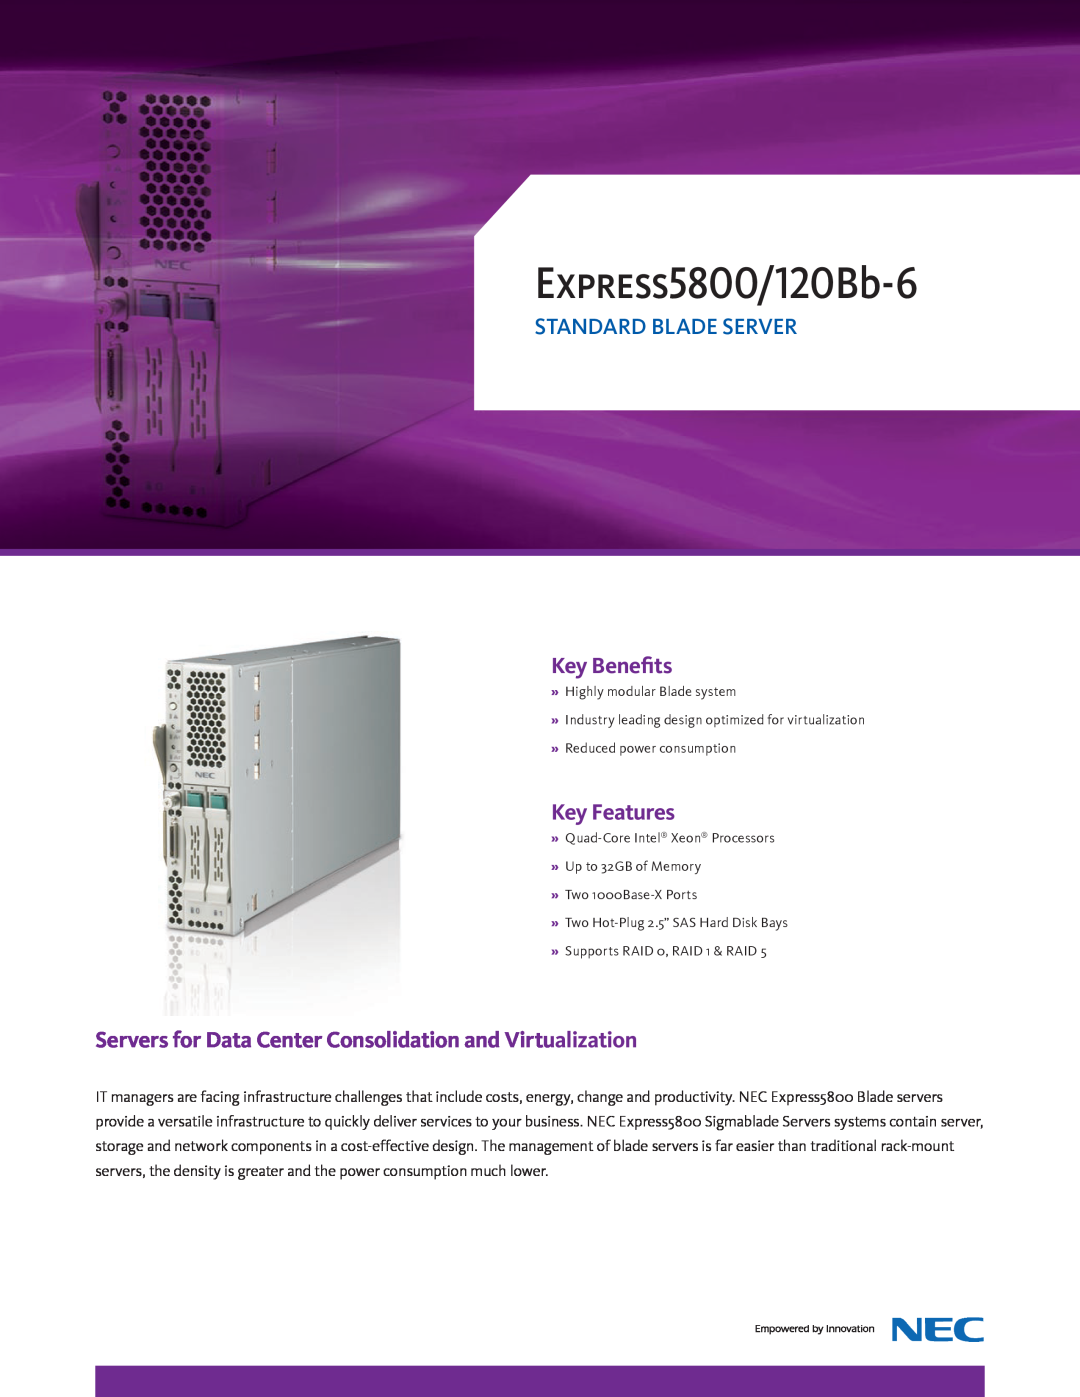 NEC Express120Bb-6 manual EXPRESS5800/120Bb-6, Standard Blade Server, Key Benefits, Key Features 